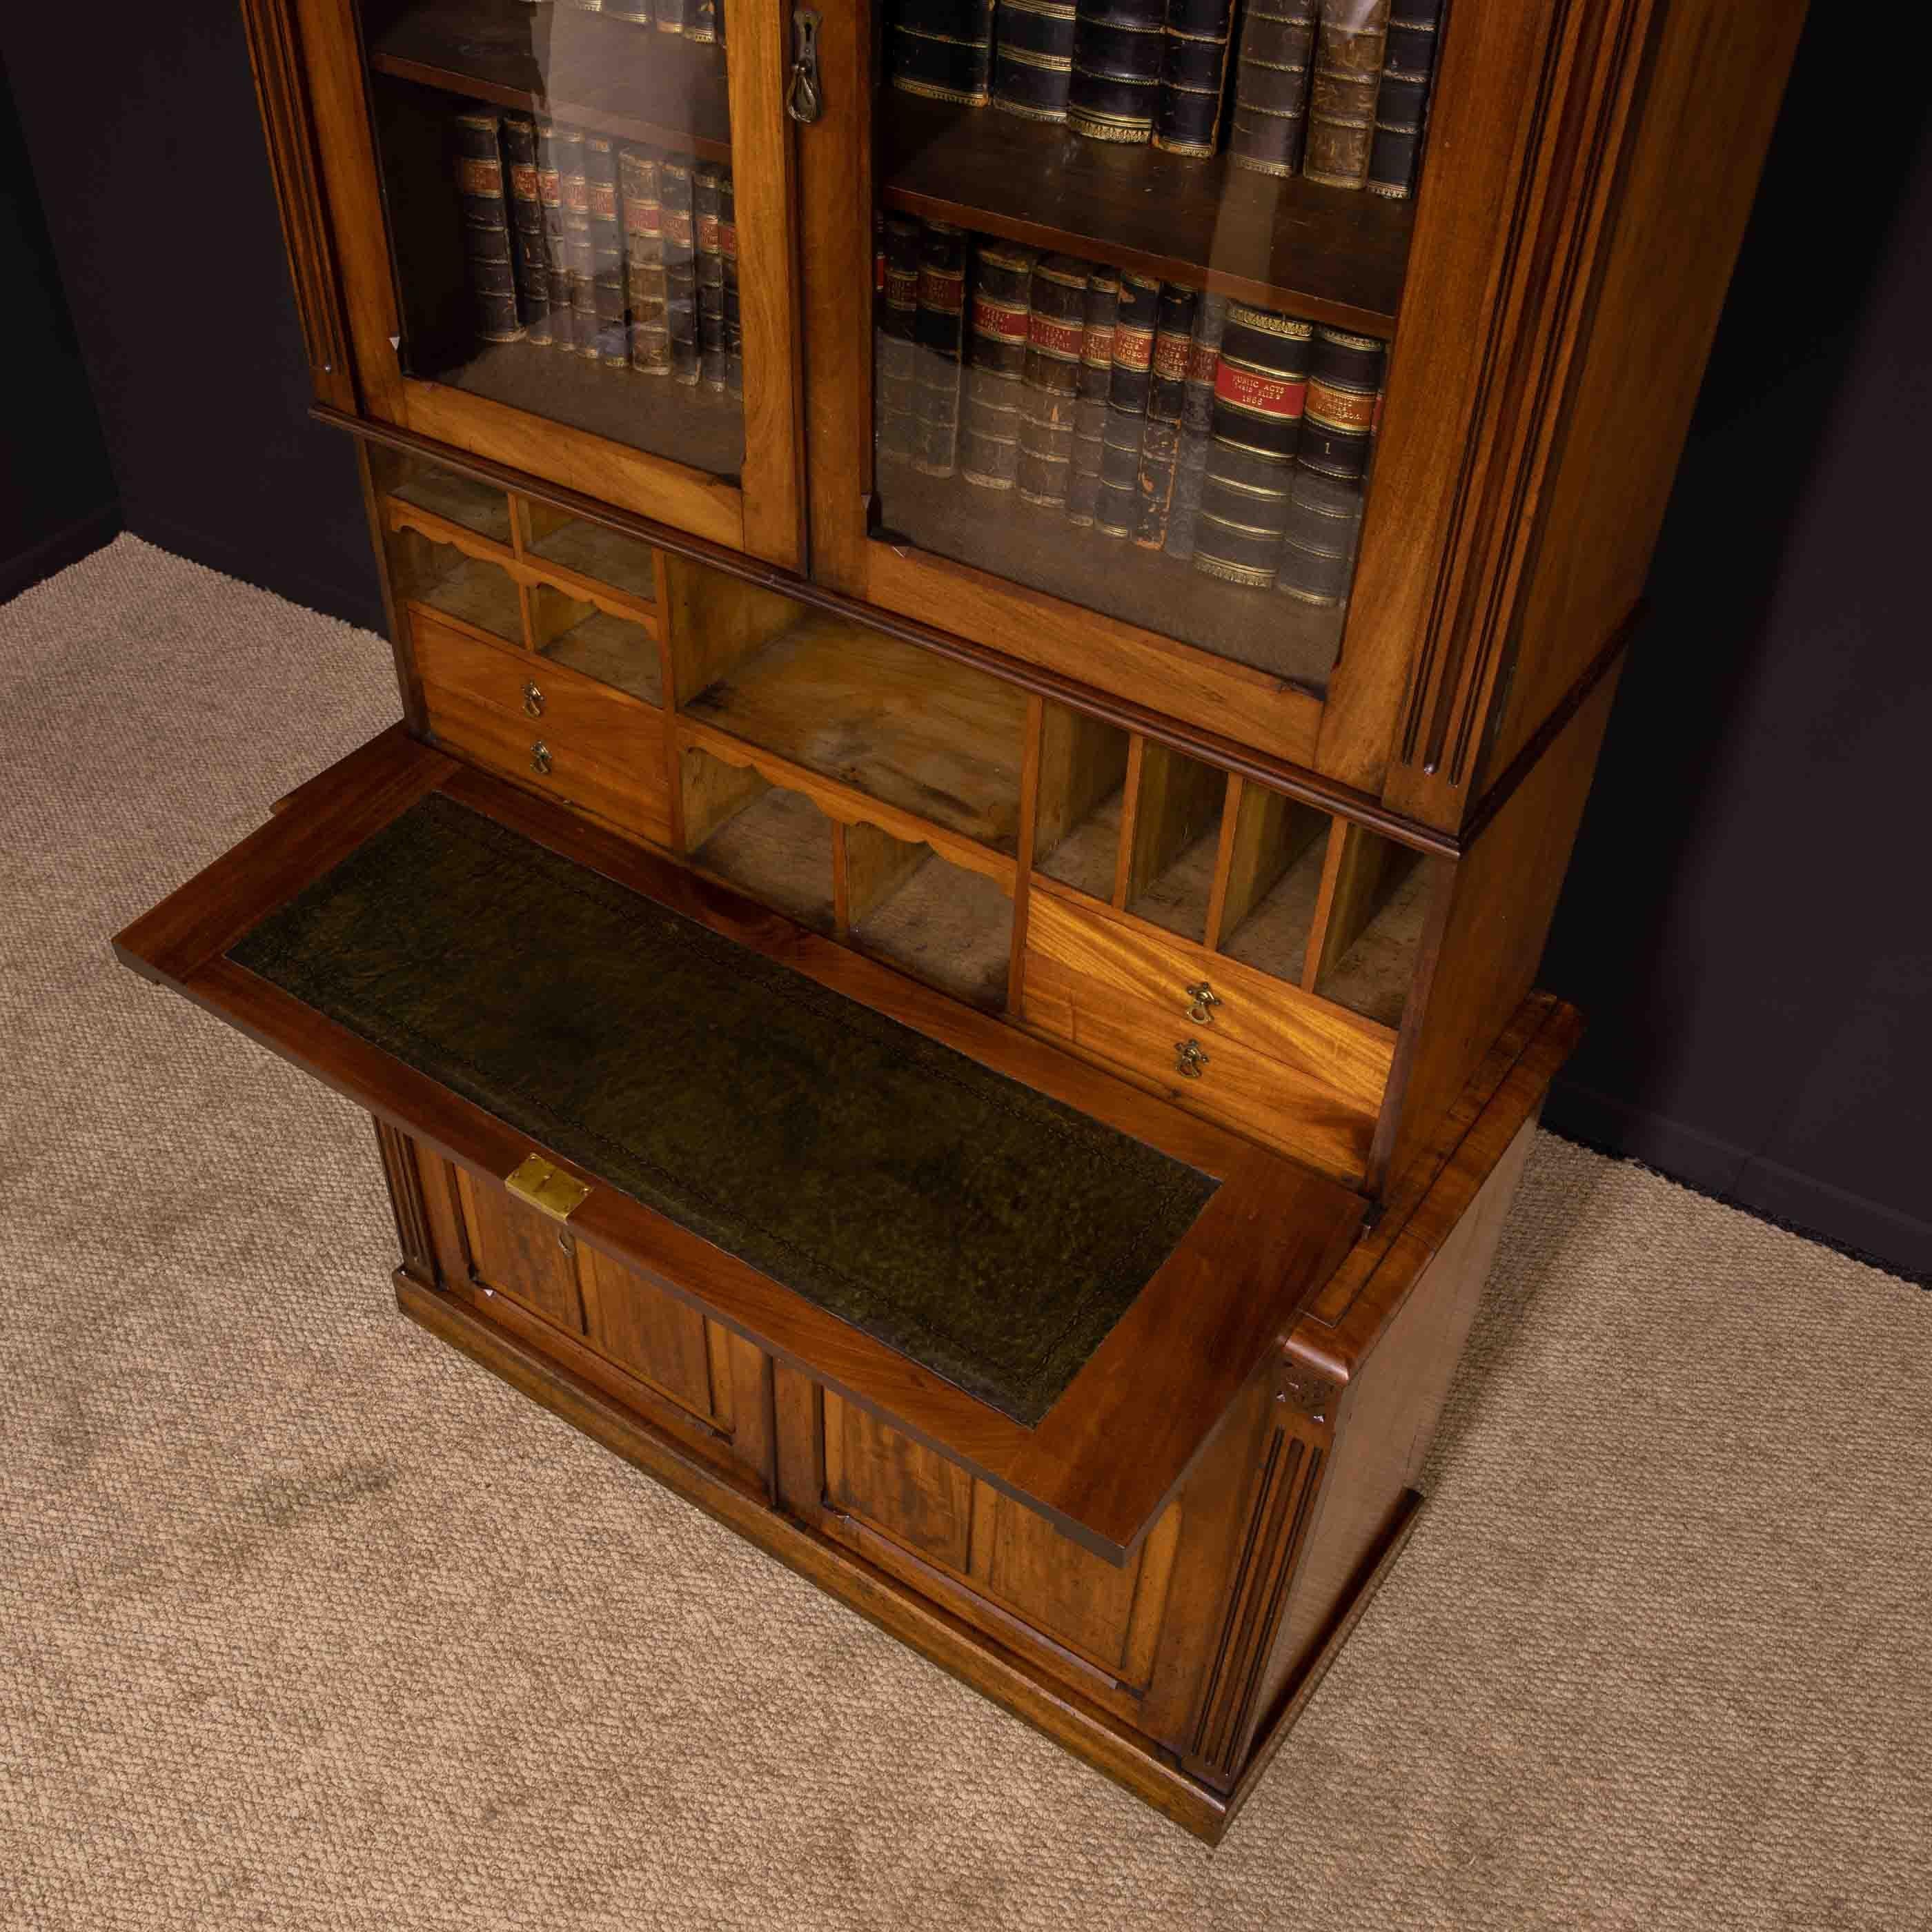 Victorian Mahogany Secretaire Bookcase In Good Condition For Sale In Manchester, GB